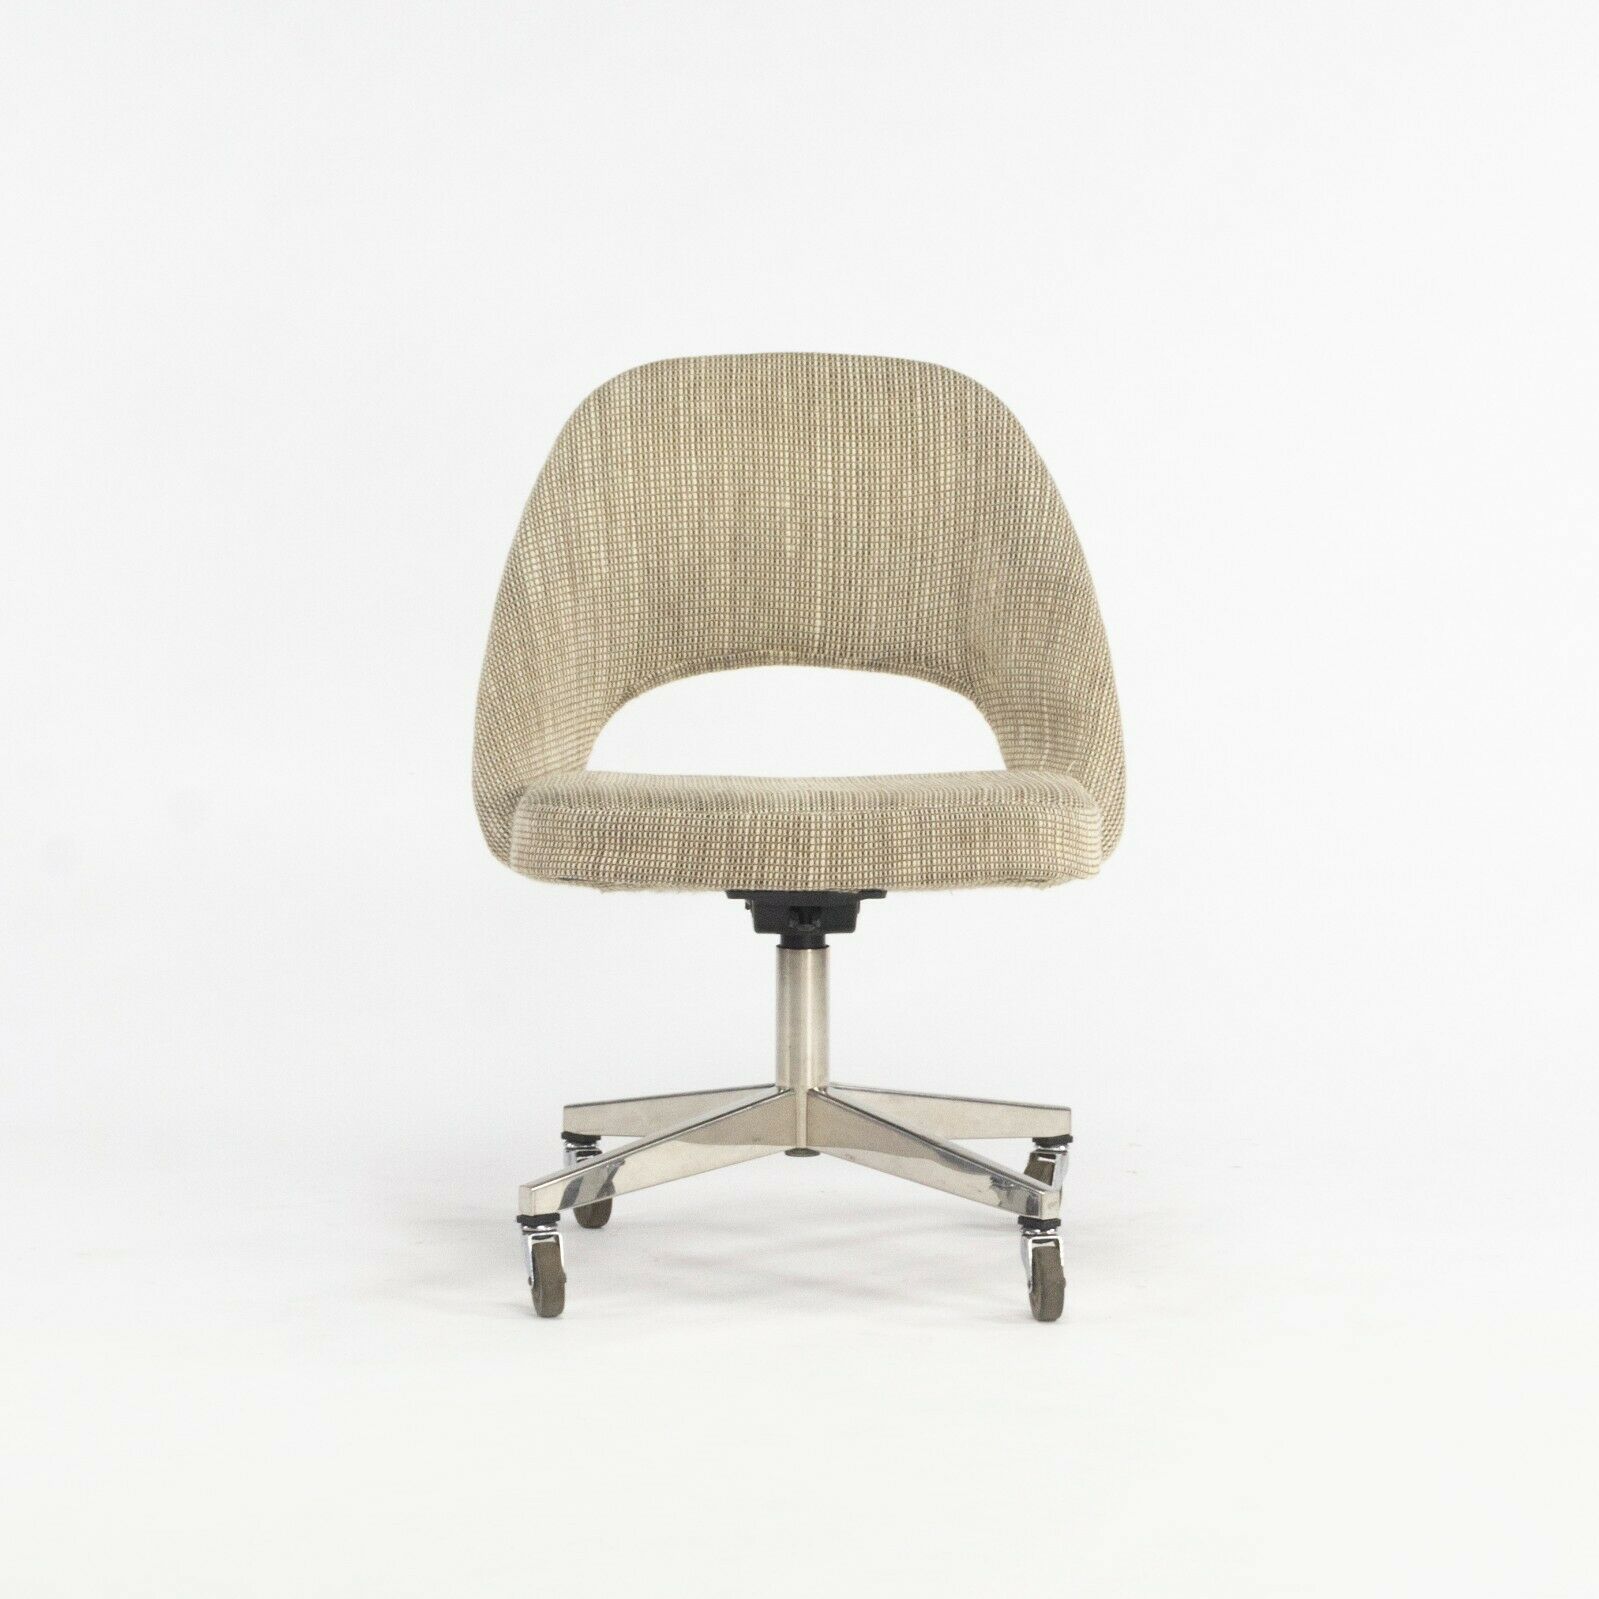 1974 Eero Saarinen for Knoll Rolling Executive Office Chairs Original Tan Fabric